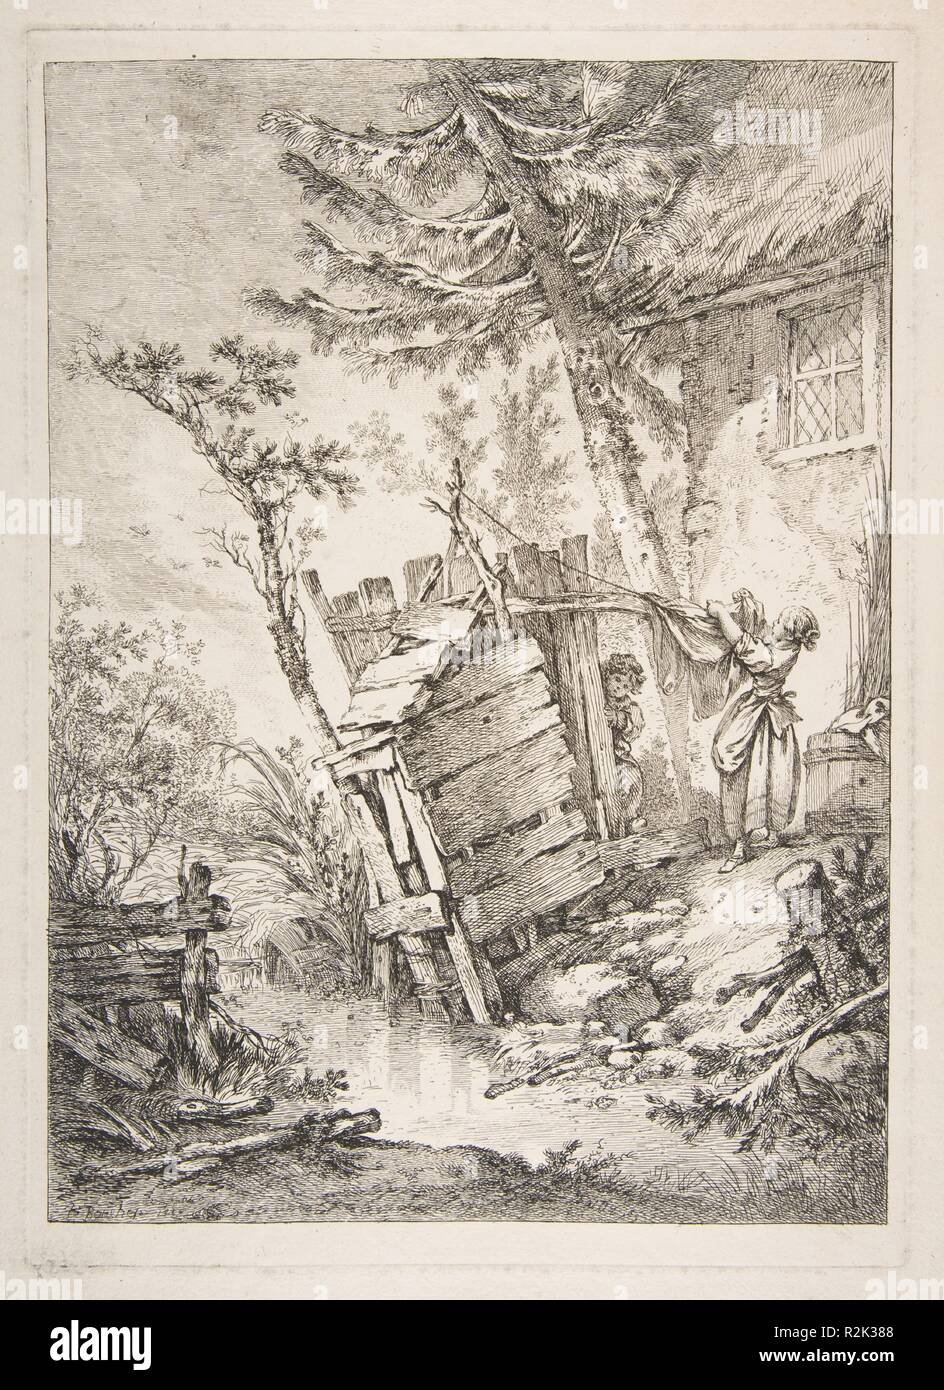 The Laundress. Artist: François Boucher (French, Paris 1703-1770 Paris). Dimensions: image: 11 5/8 x 8 7/16 in. (29.6 x 21.4 cm)  plate: 12 3/8 x 8 3/4 in. (31.5 x 22.3 cm)  sheet: 18 7/8 x 13 3/4 in. (48 x 35 cm). Date: 1756. Museum: Metropolitan Museum of Art, New York, USA. Author: Francois Boucher. Stock Photo